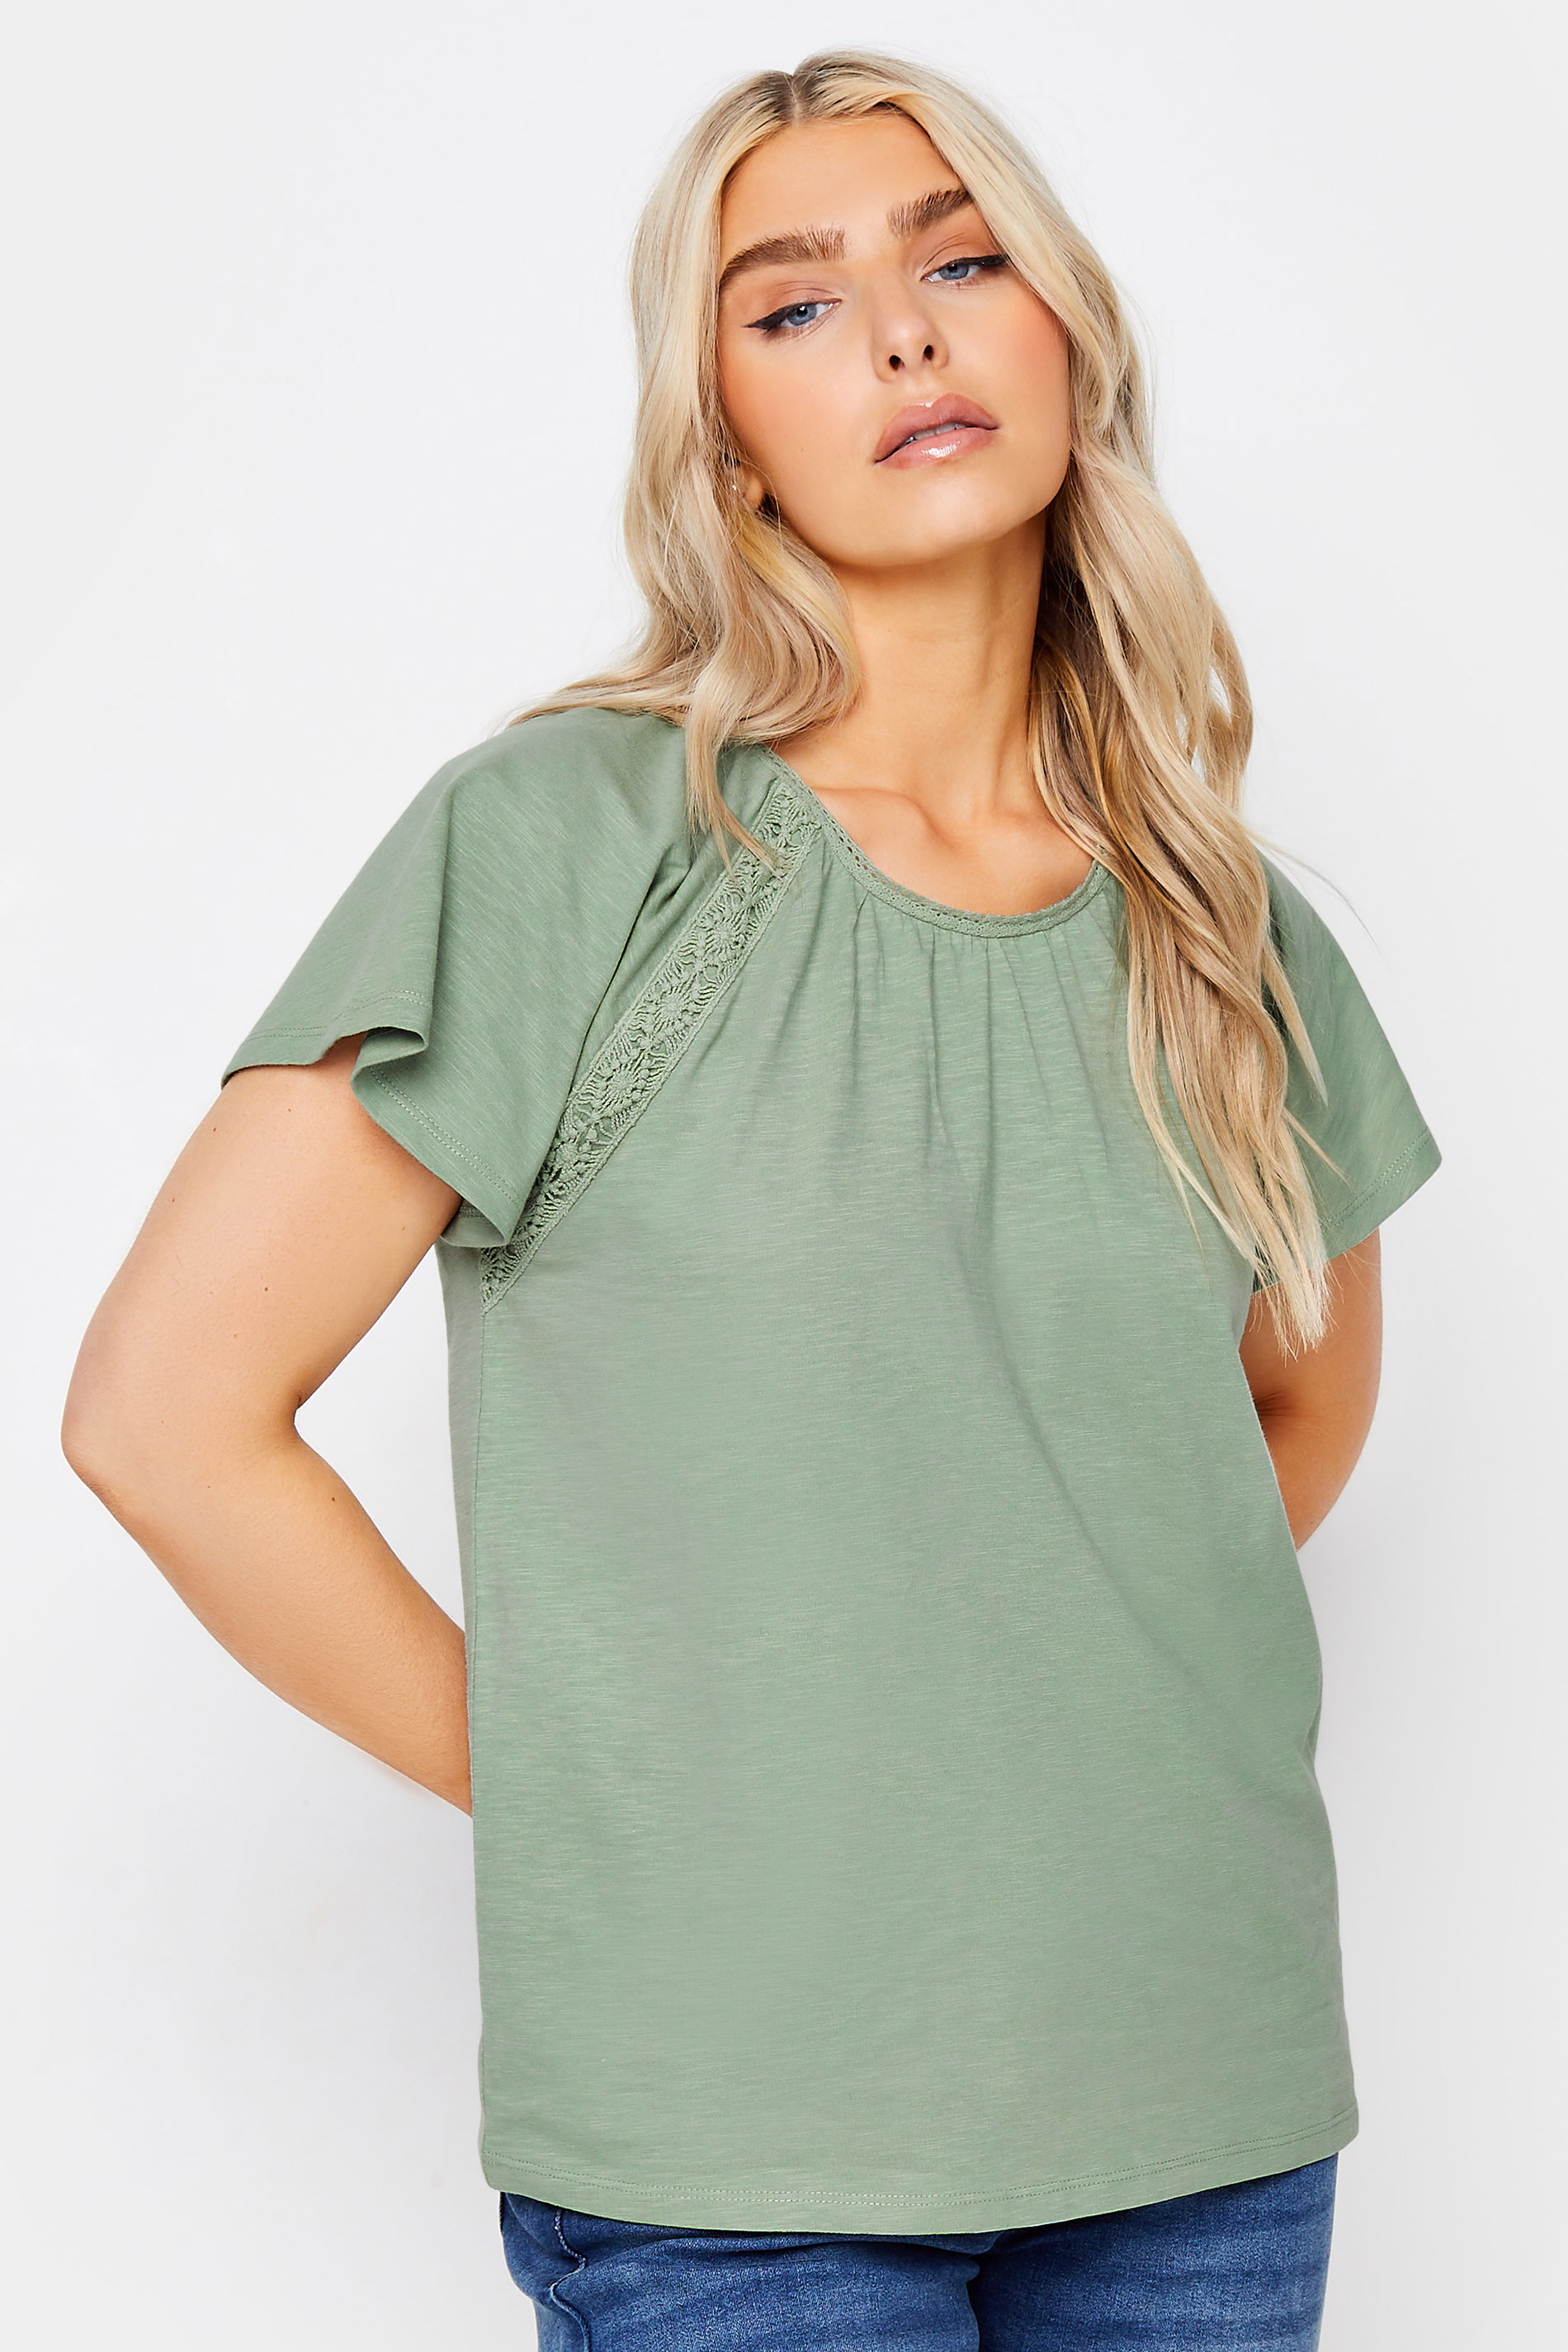 M&Co Green Lace Detail Cotton Top | M&Co 1